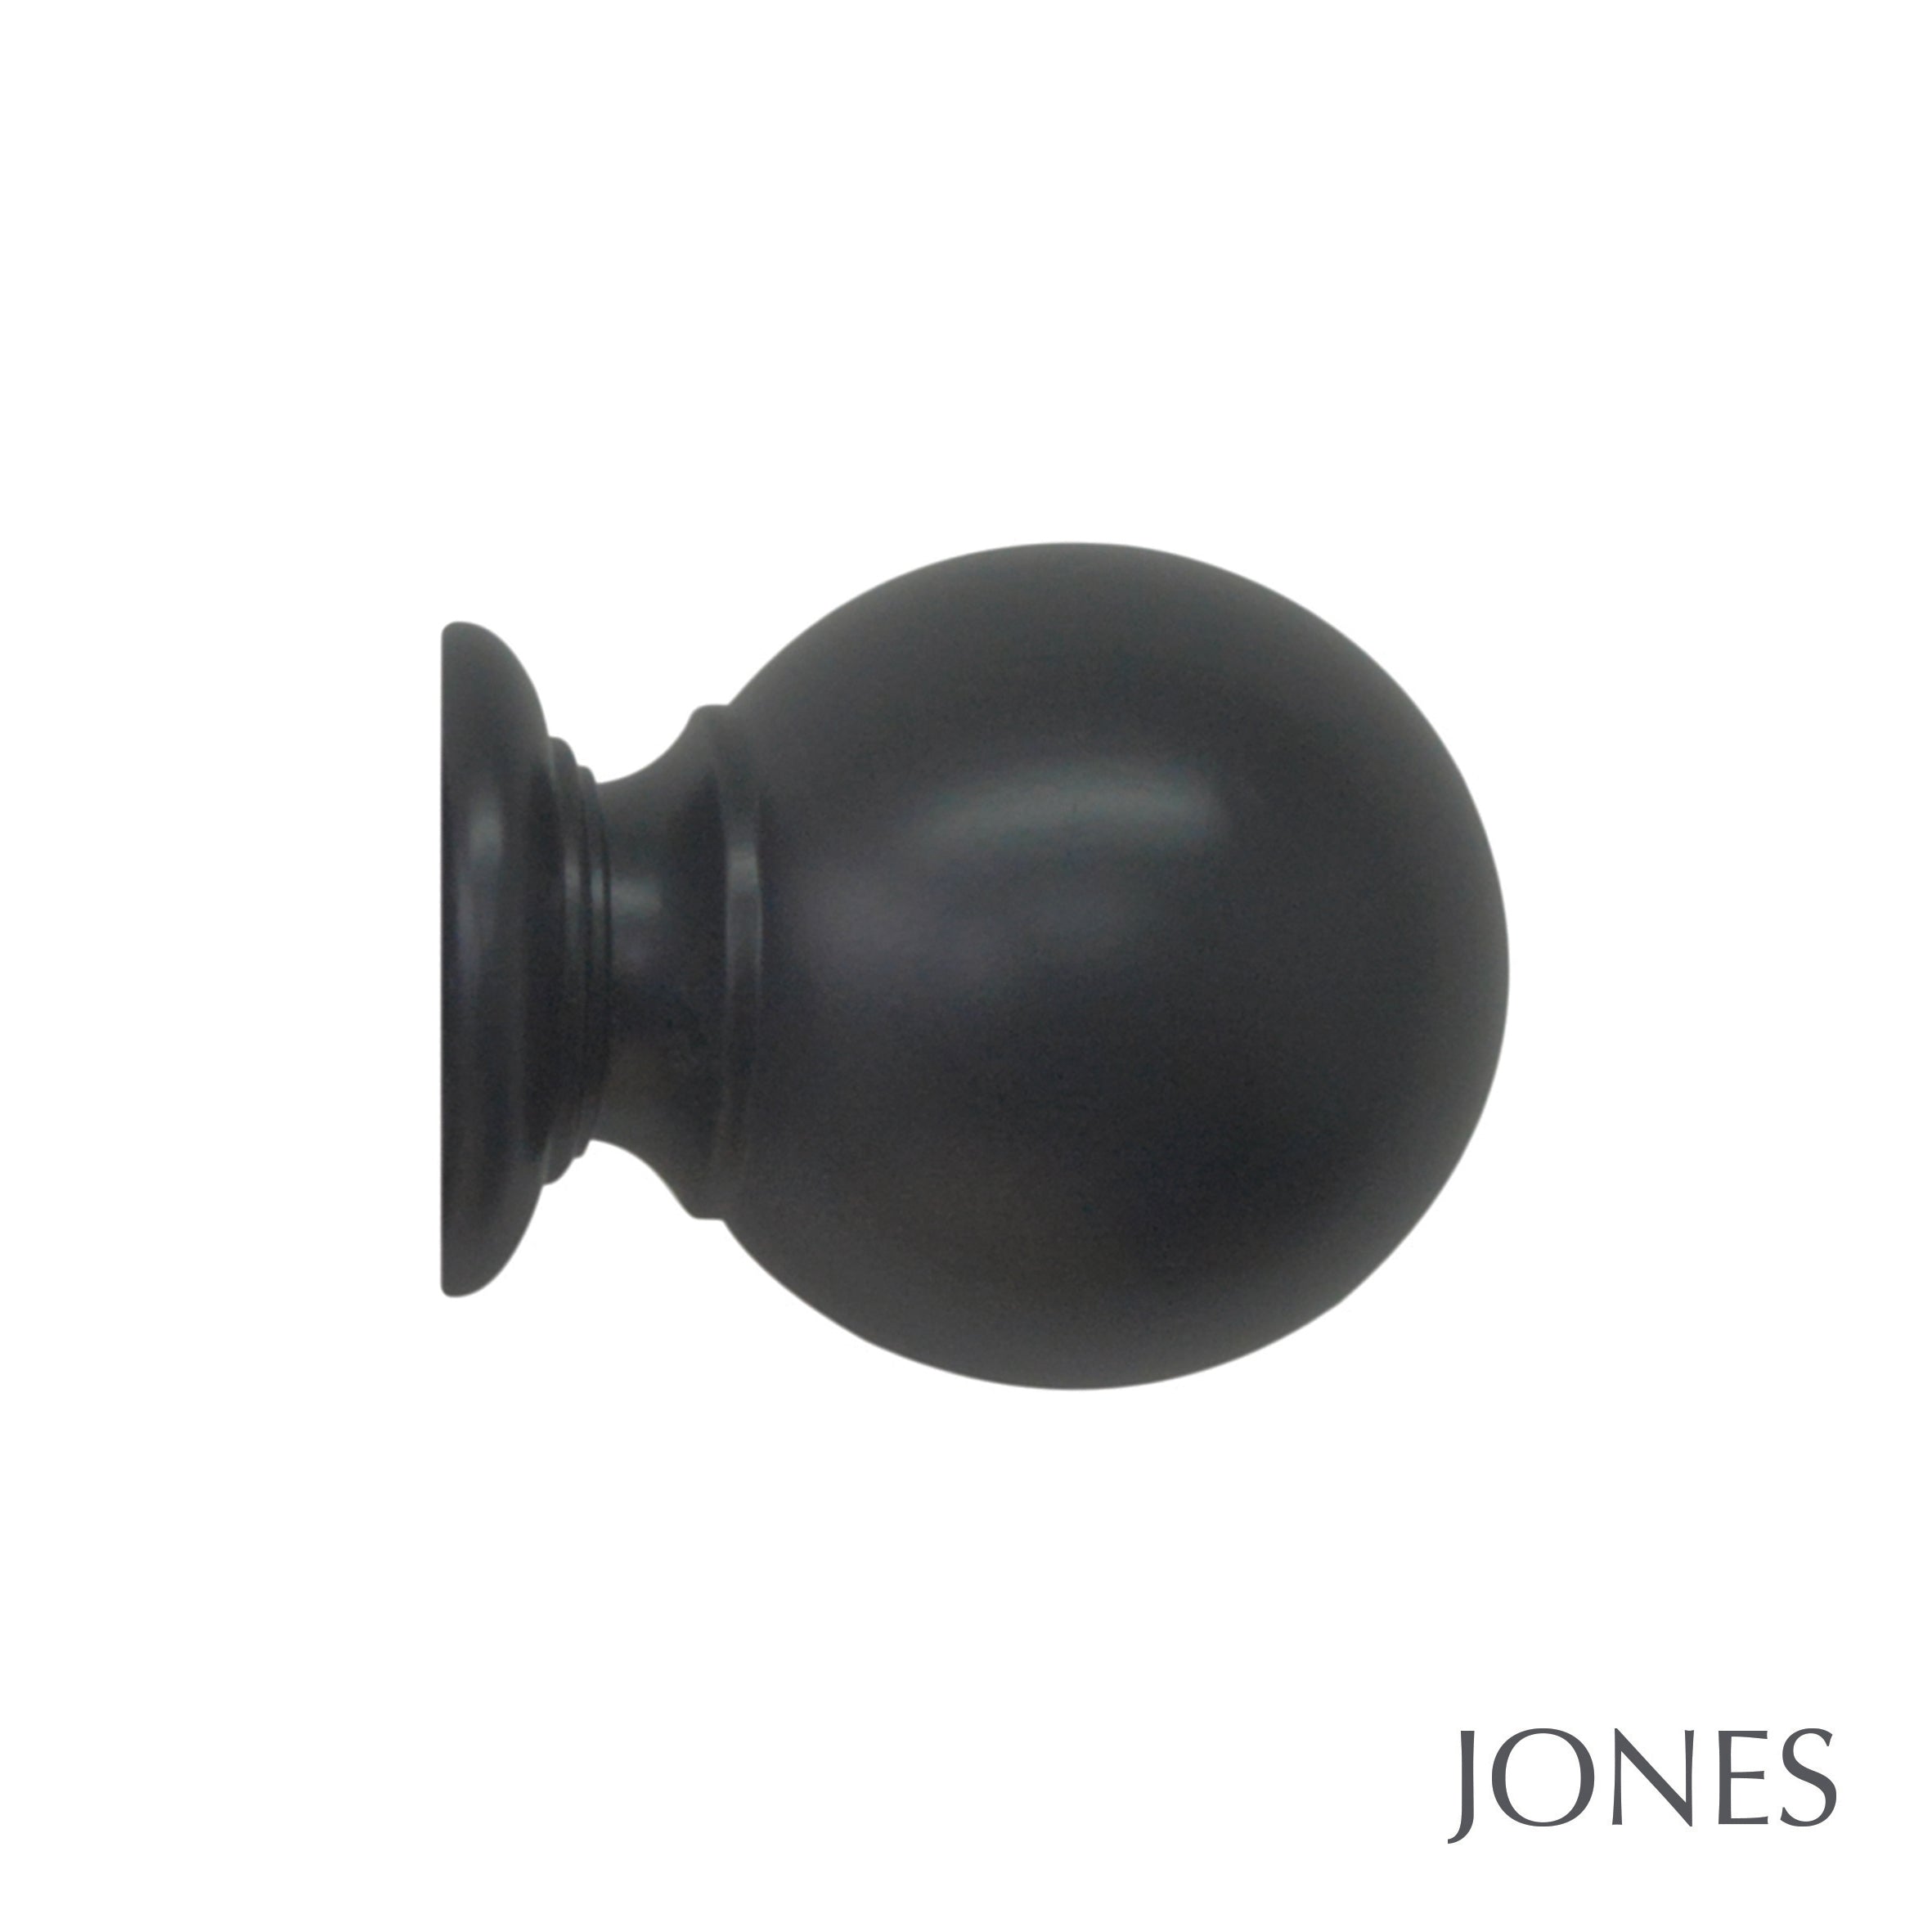 Jones Interiors Estate Ball Finial Curtain Pole Set in Charcoal